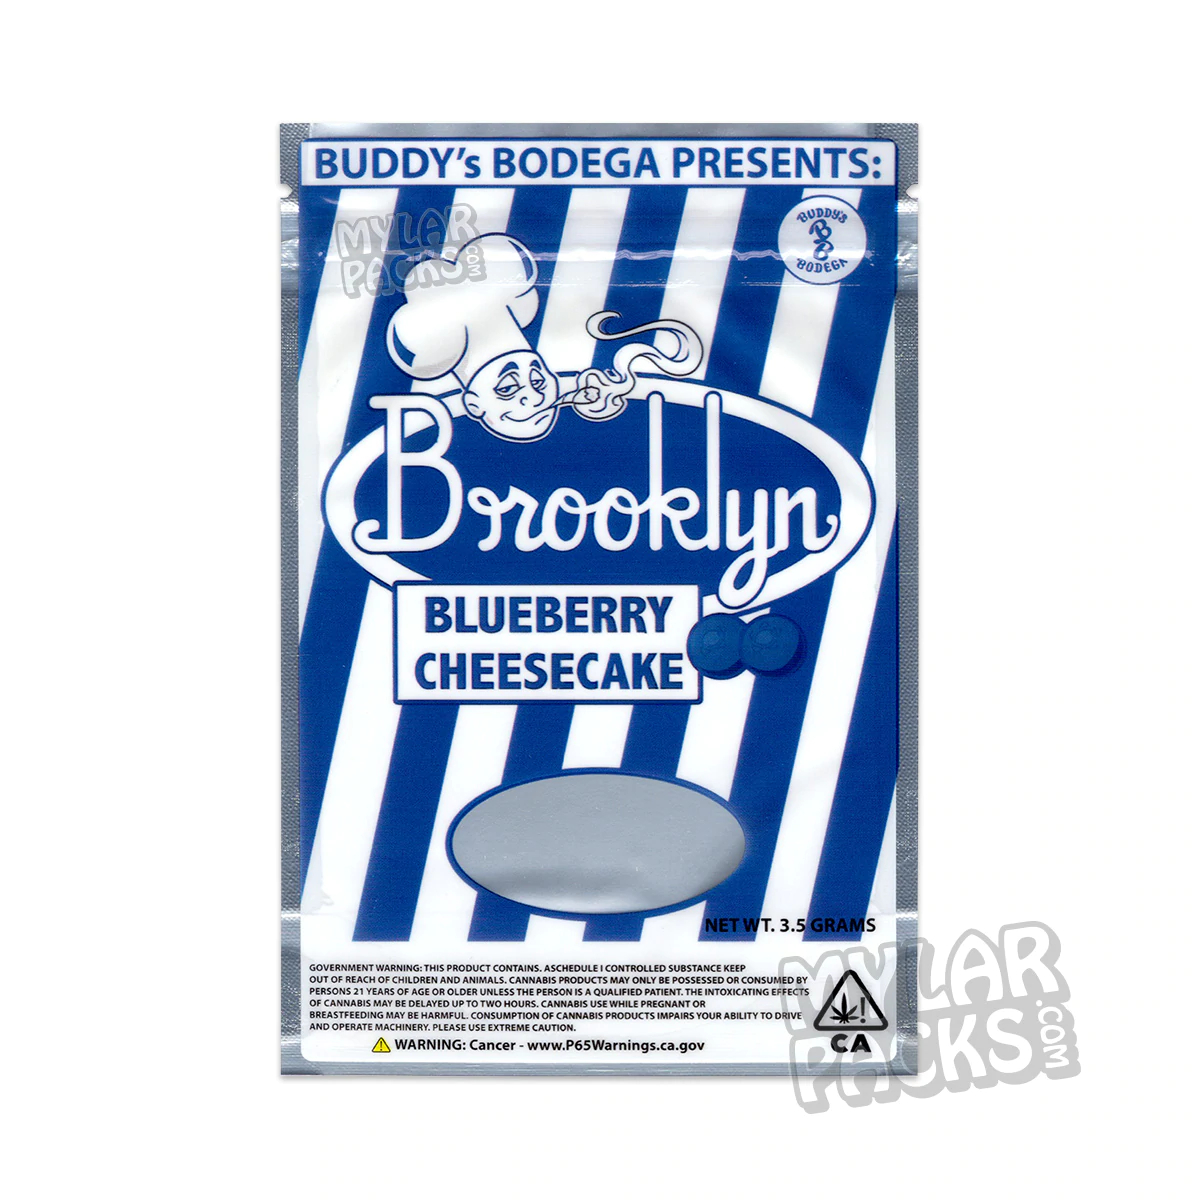 Buddy's Bodega Brooklyn Blueberry Cheesecake 3.5g Empty Mylar Bag Flower Dry Herb Packaging